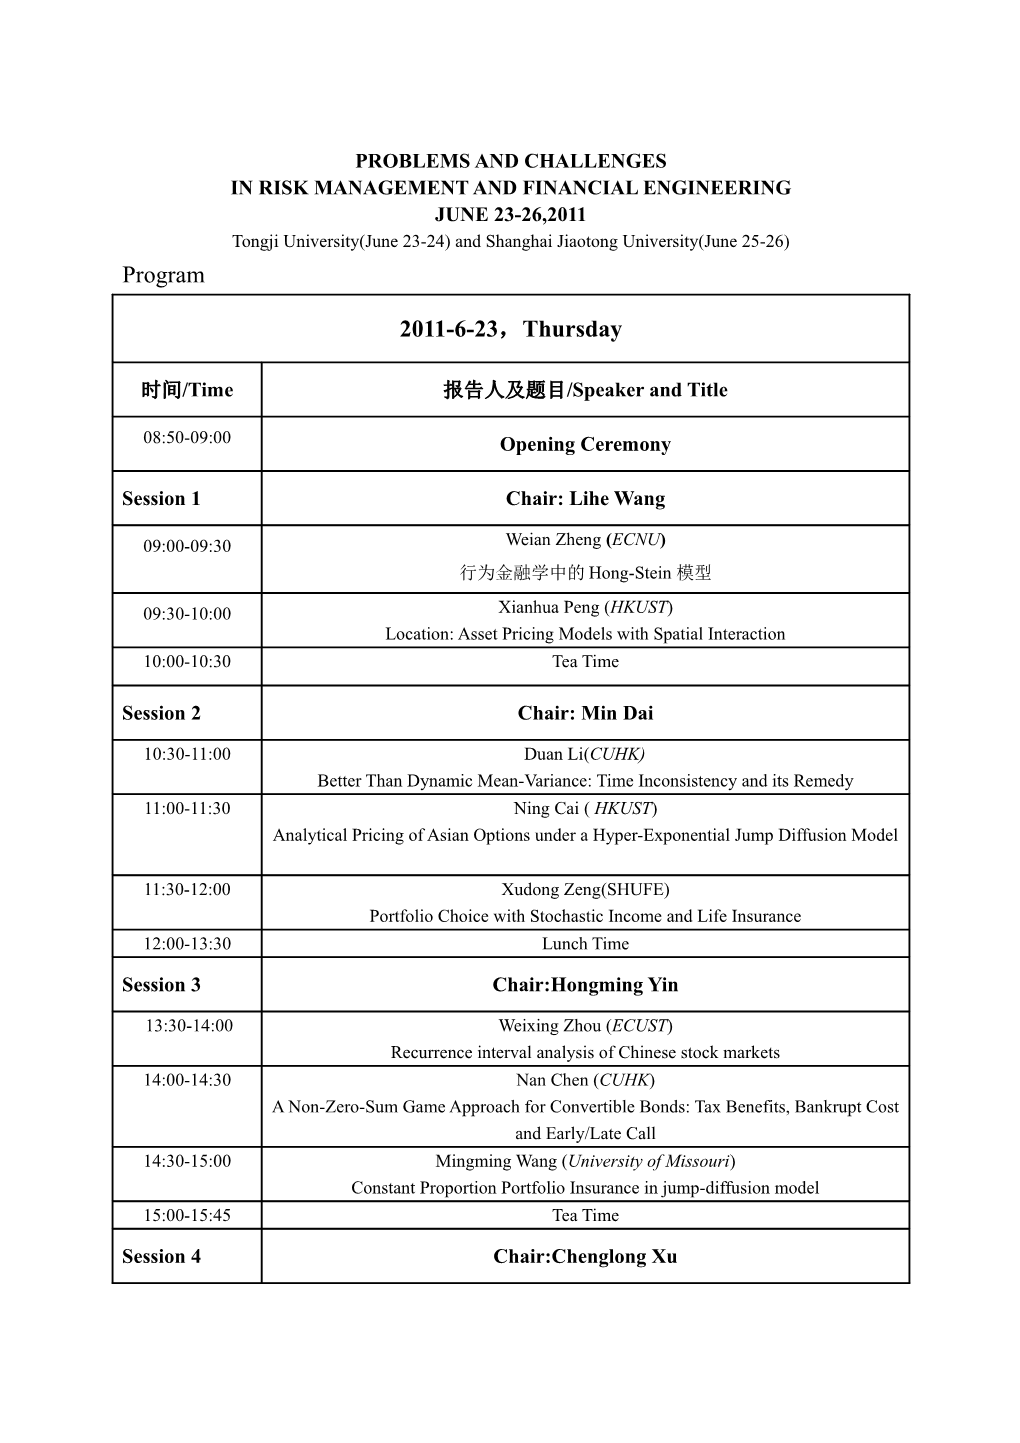 Plenary Lecture Program